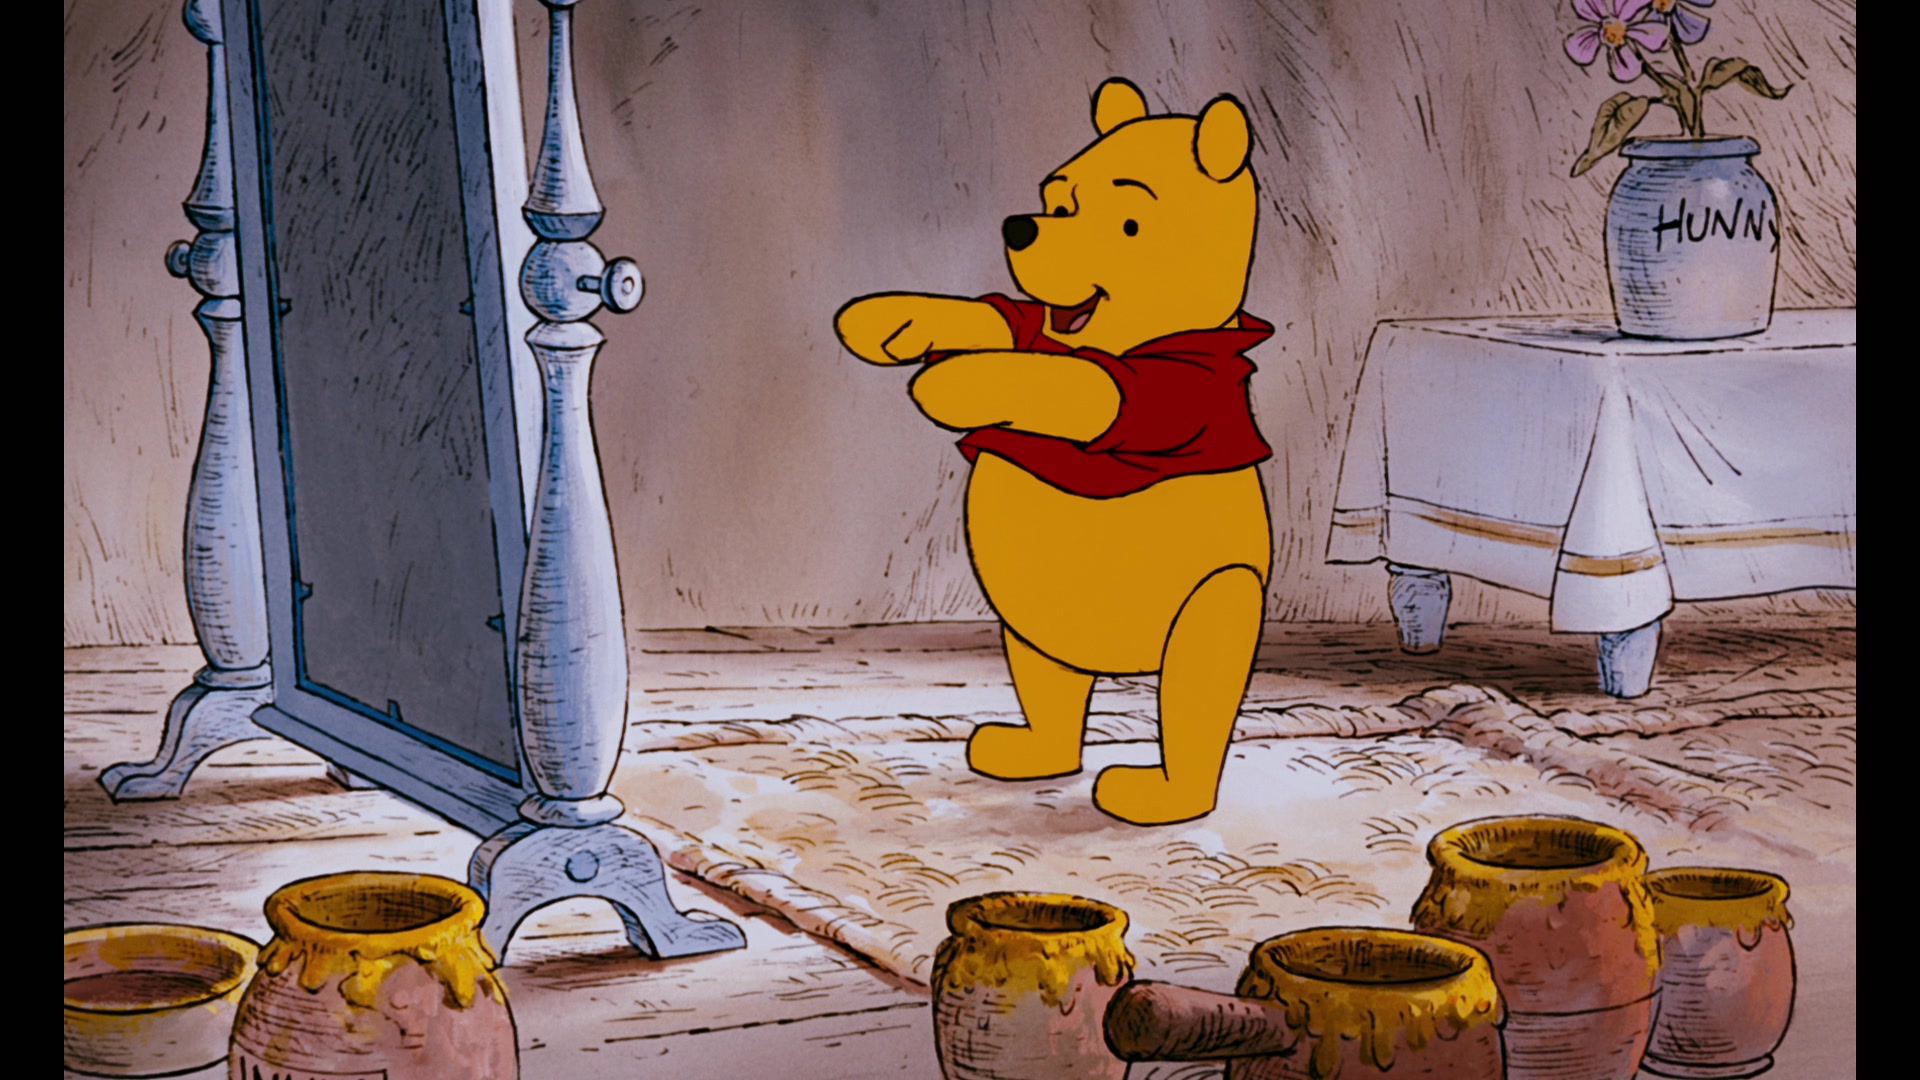 Winnie the pooh adventures. Винни пух 1977 Винни. Приключения Винни пух Уолт Дисней. Винни пух 1977 Дисней.